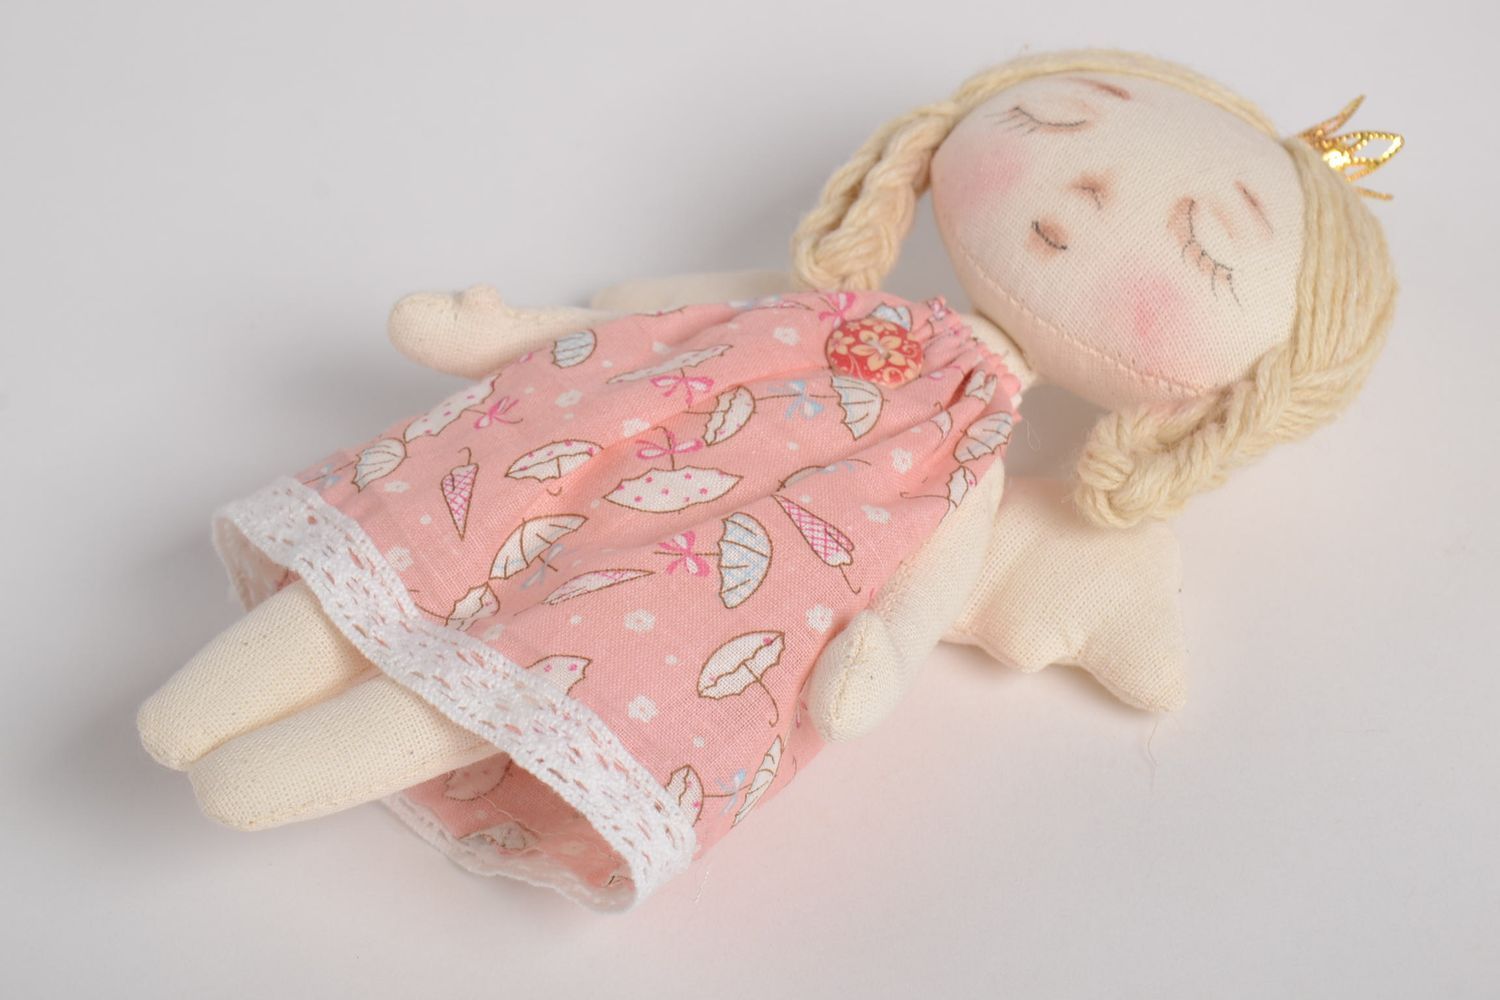 Handmade doll unusual doll for girls gift ideas nursery decor fabric doll photo 2